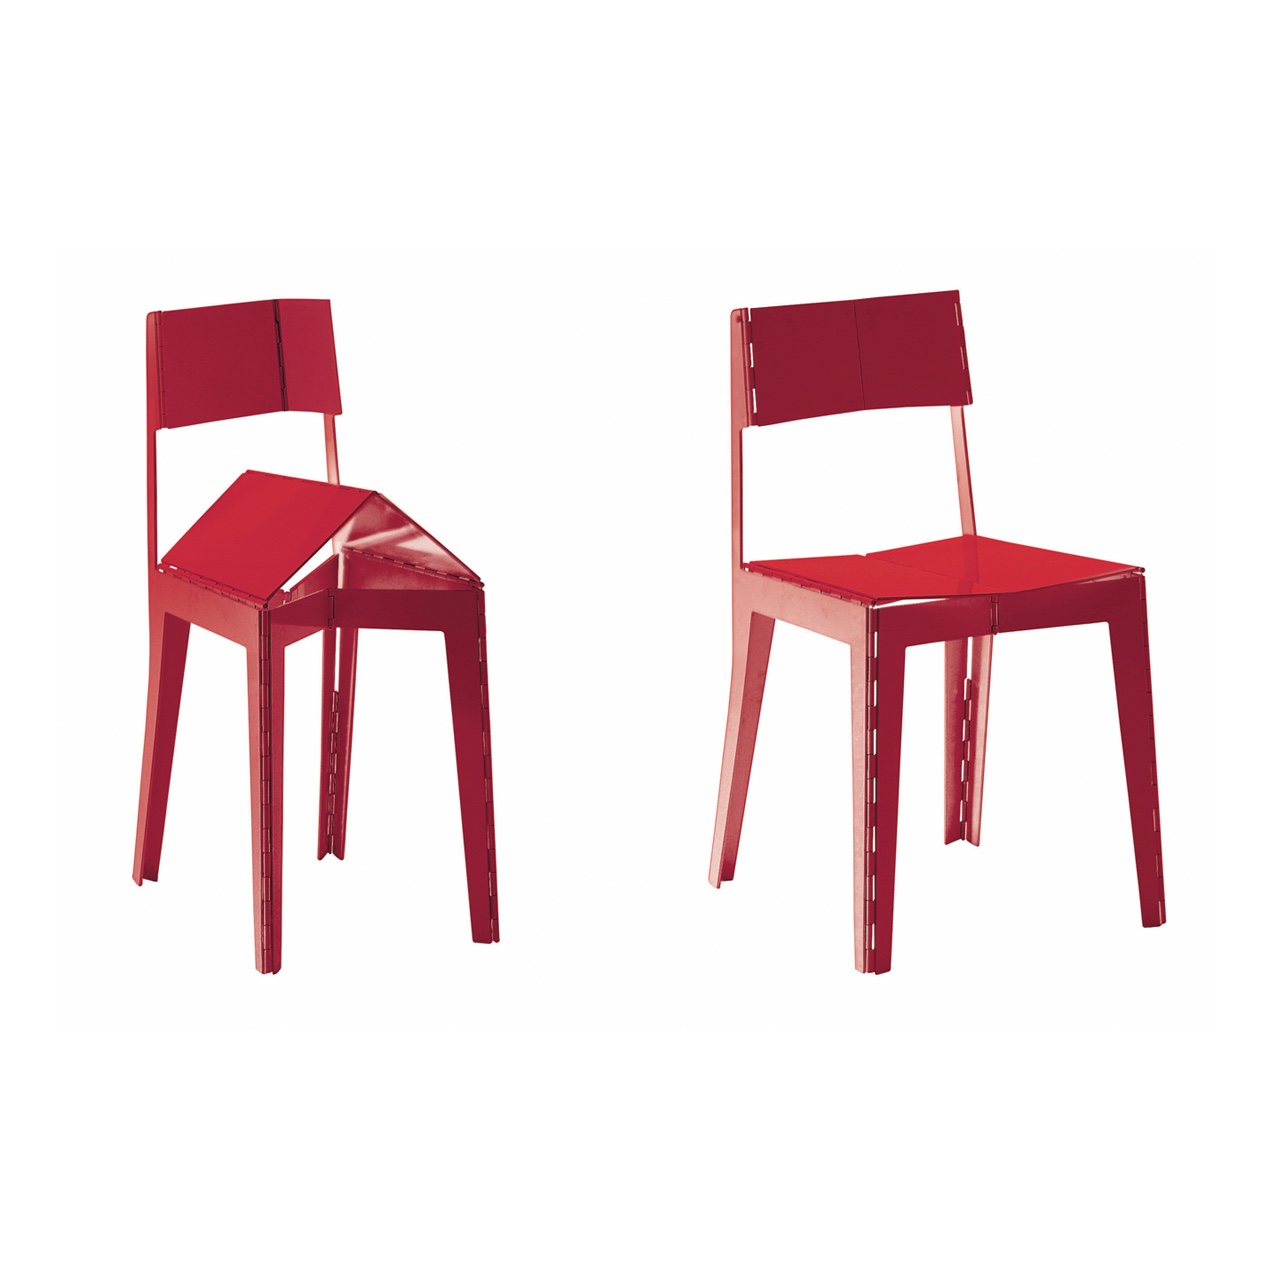 Stitch foldable chair